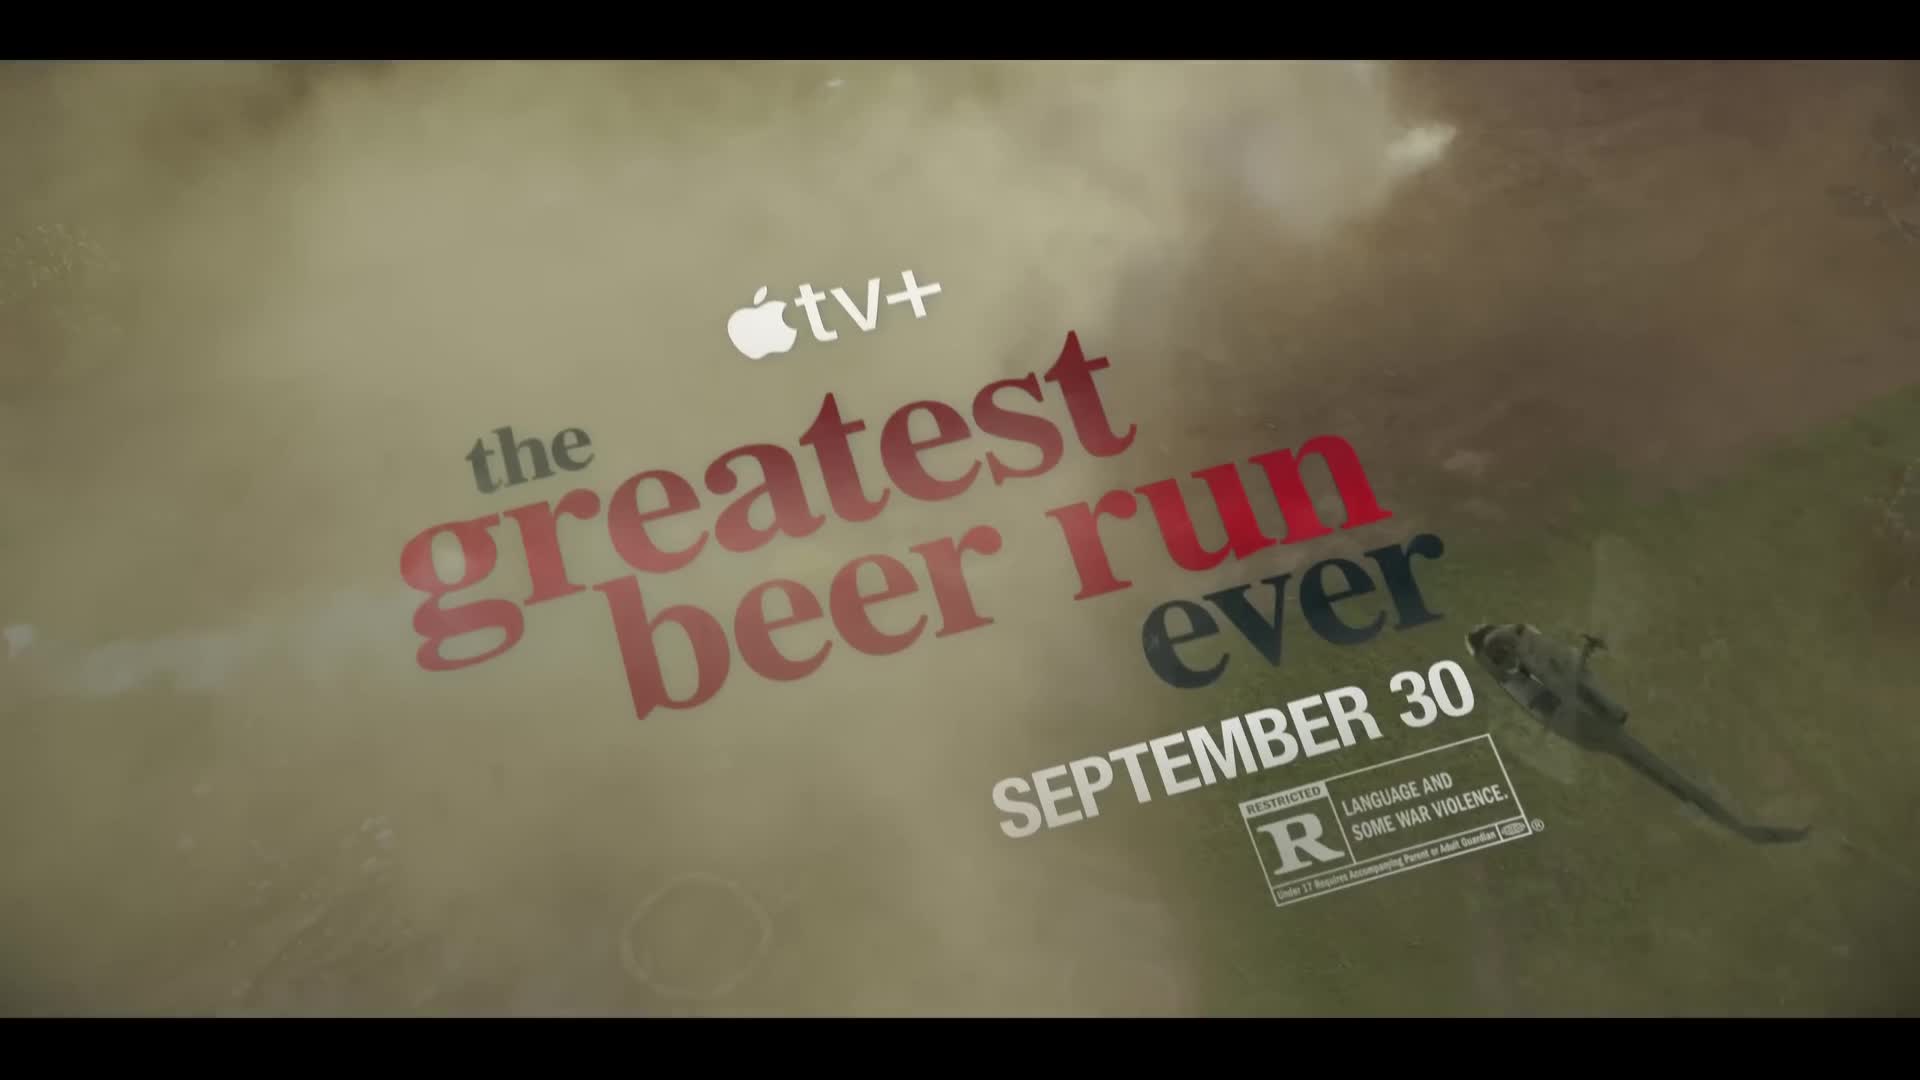 Extrait vidéo du film  The Greatest Beer Run Ever